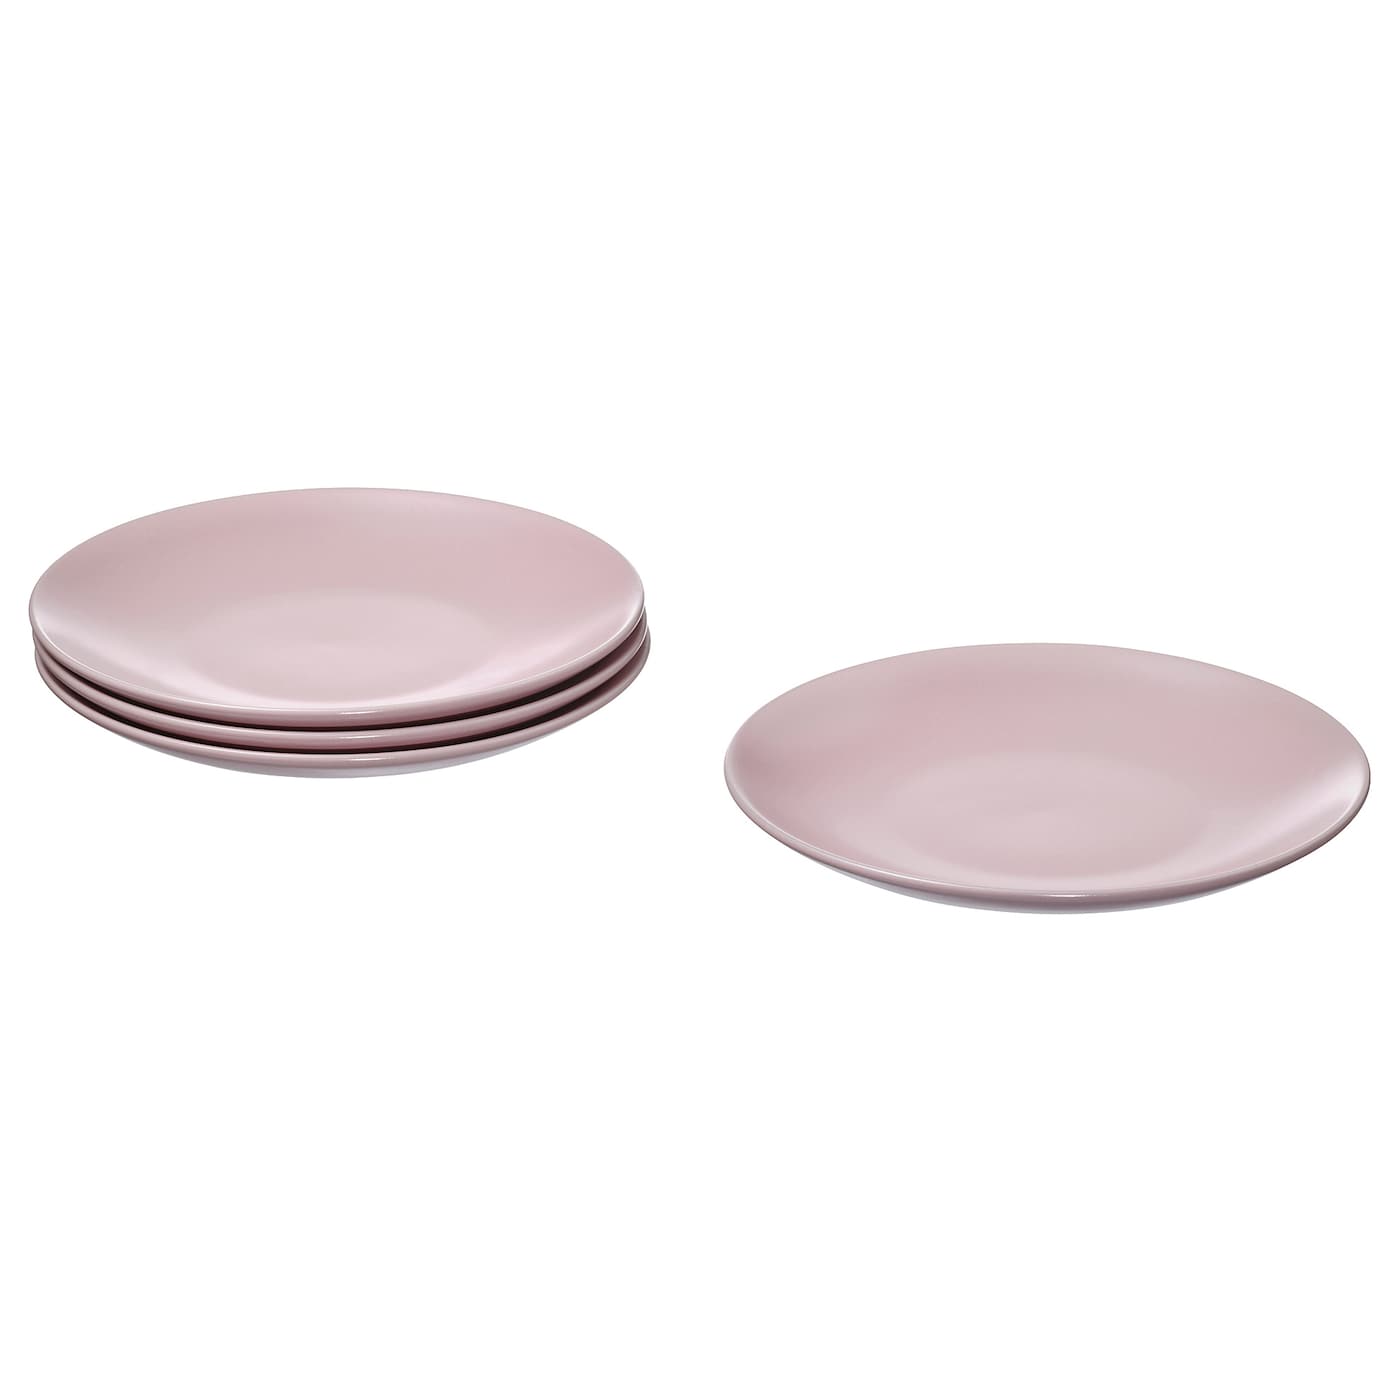 Набор тарелок, 4 шт. - IKEA FÄRGKLAR/FARGKLAR, 20 см, светло-розовый, ФЭРГКЛАР ИКЕА